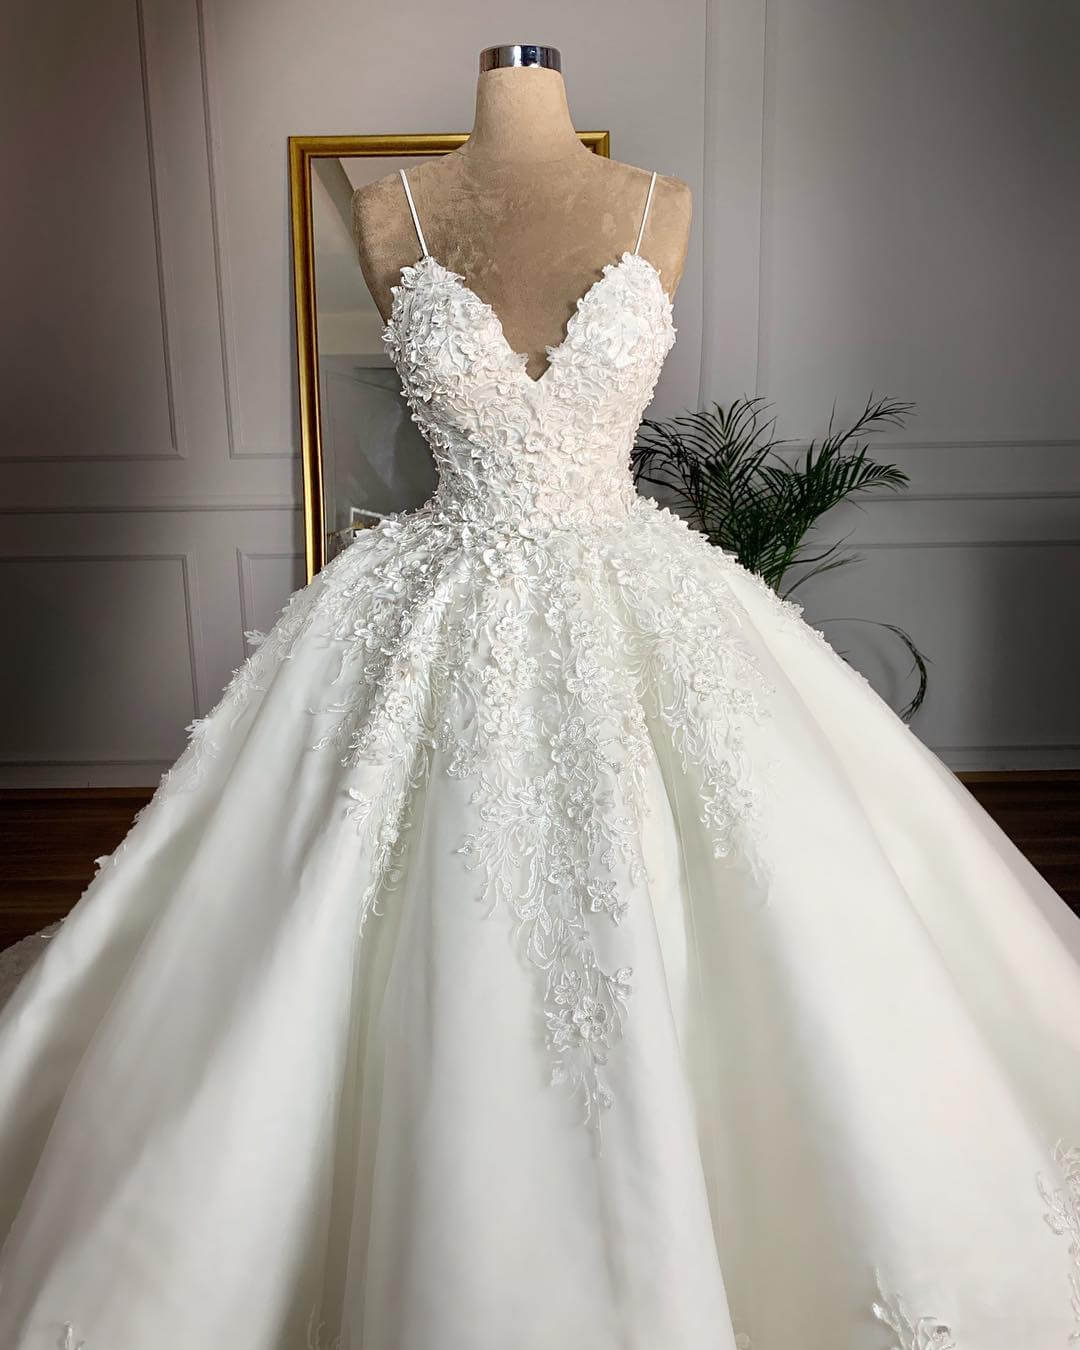 Vintage Lace Floral Wedding Dresses 2019 Casamento 3D Flower Bridal Ball Gowns V-neck Lace Up Plus Size Bride Dress Gelinlik - LiveTrendsX